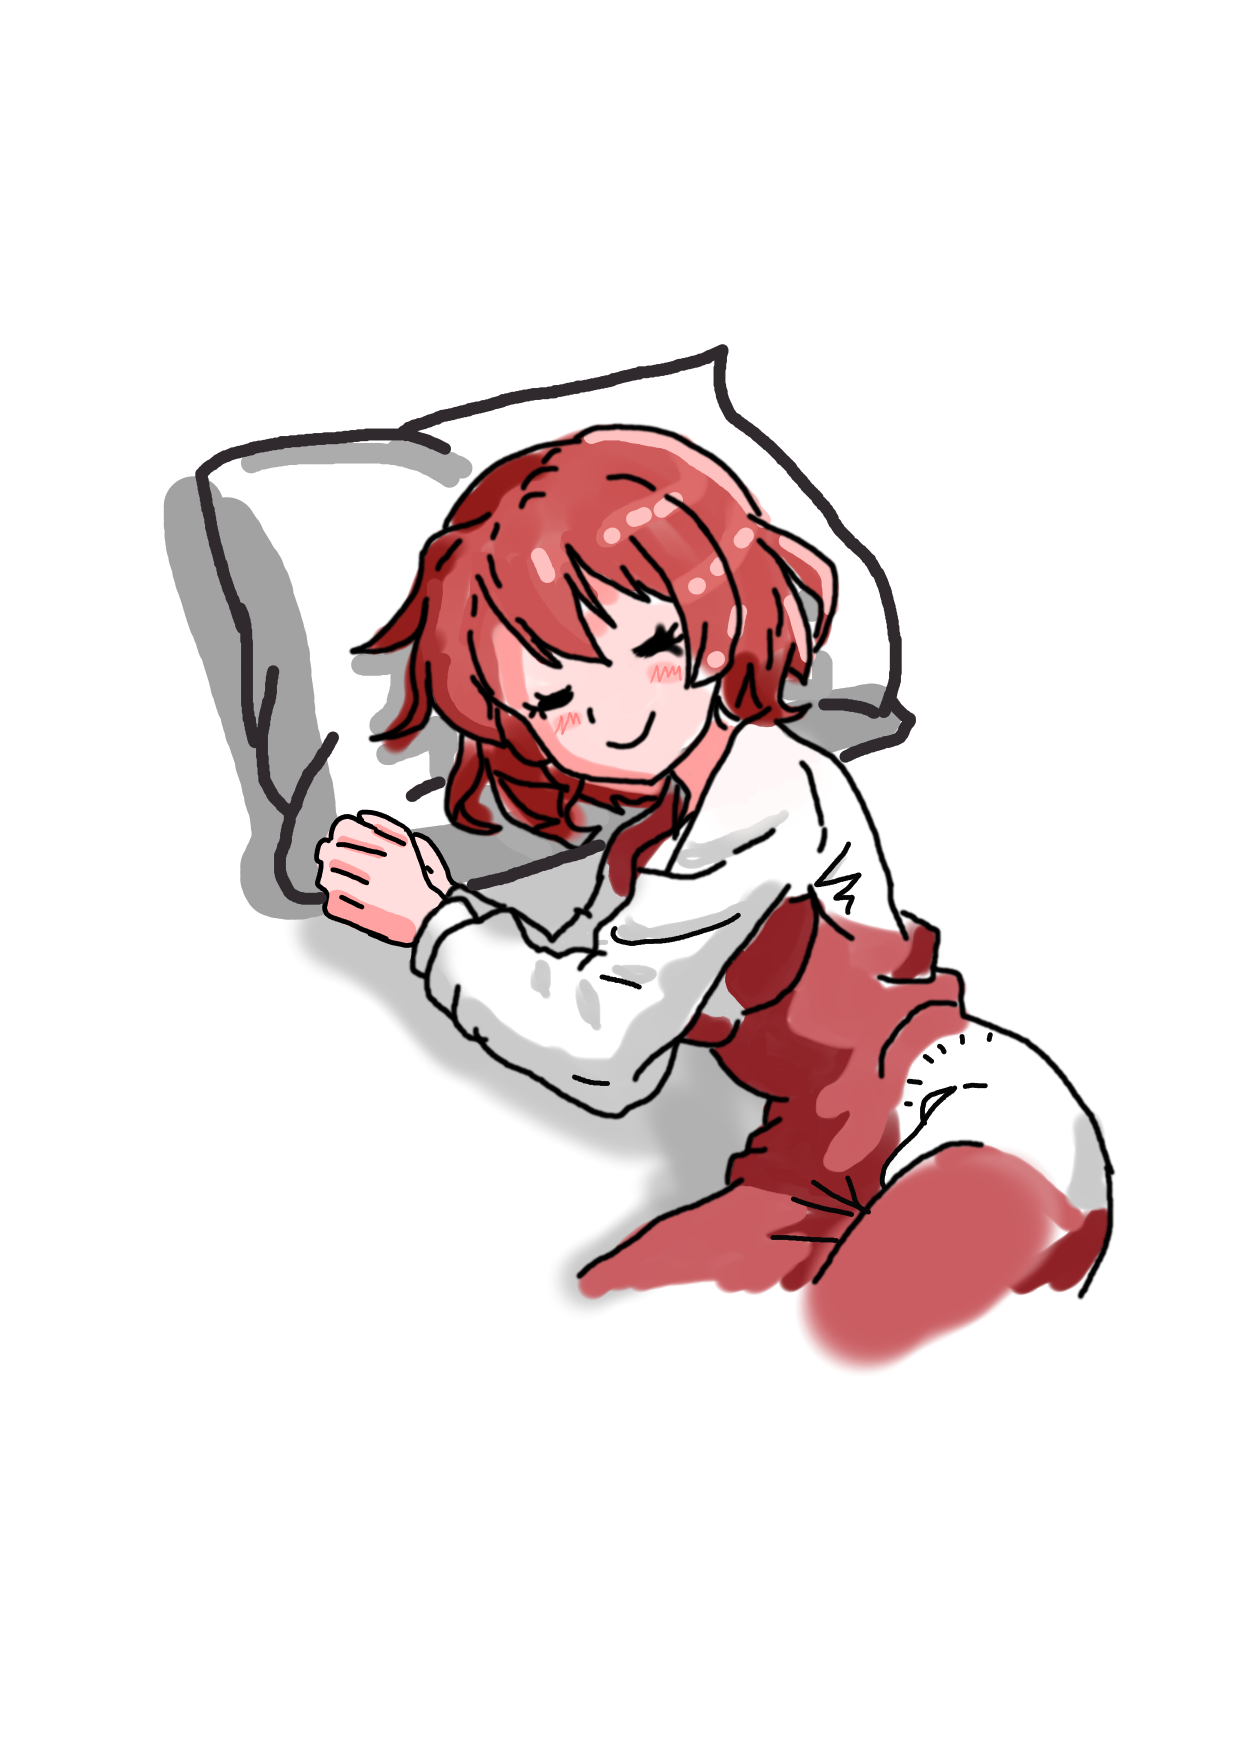 Illustration of a sleeping girl